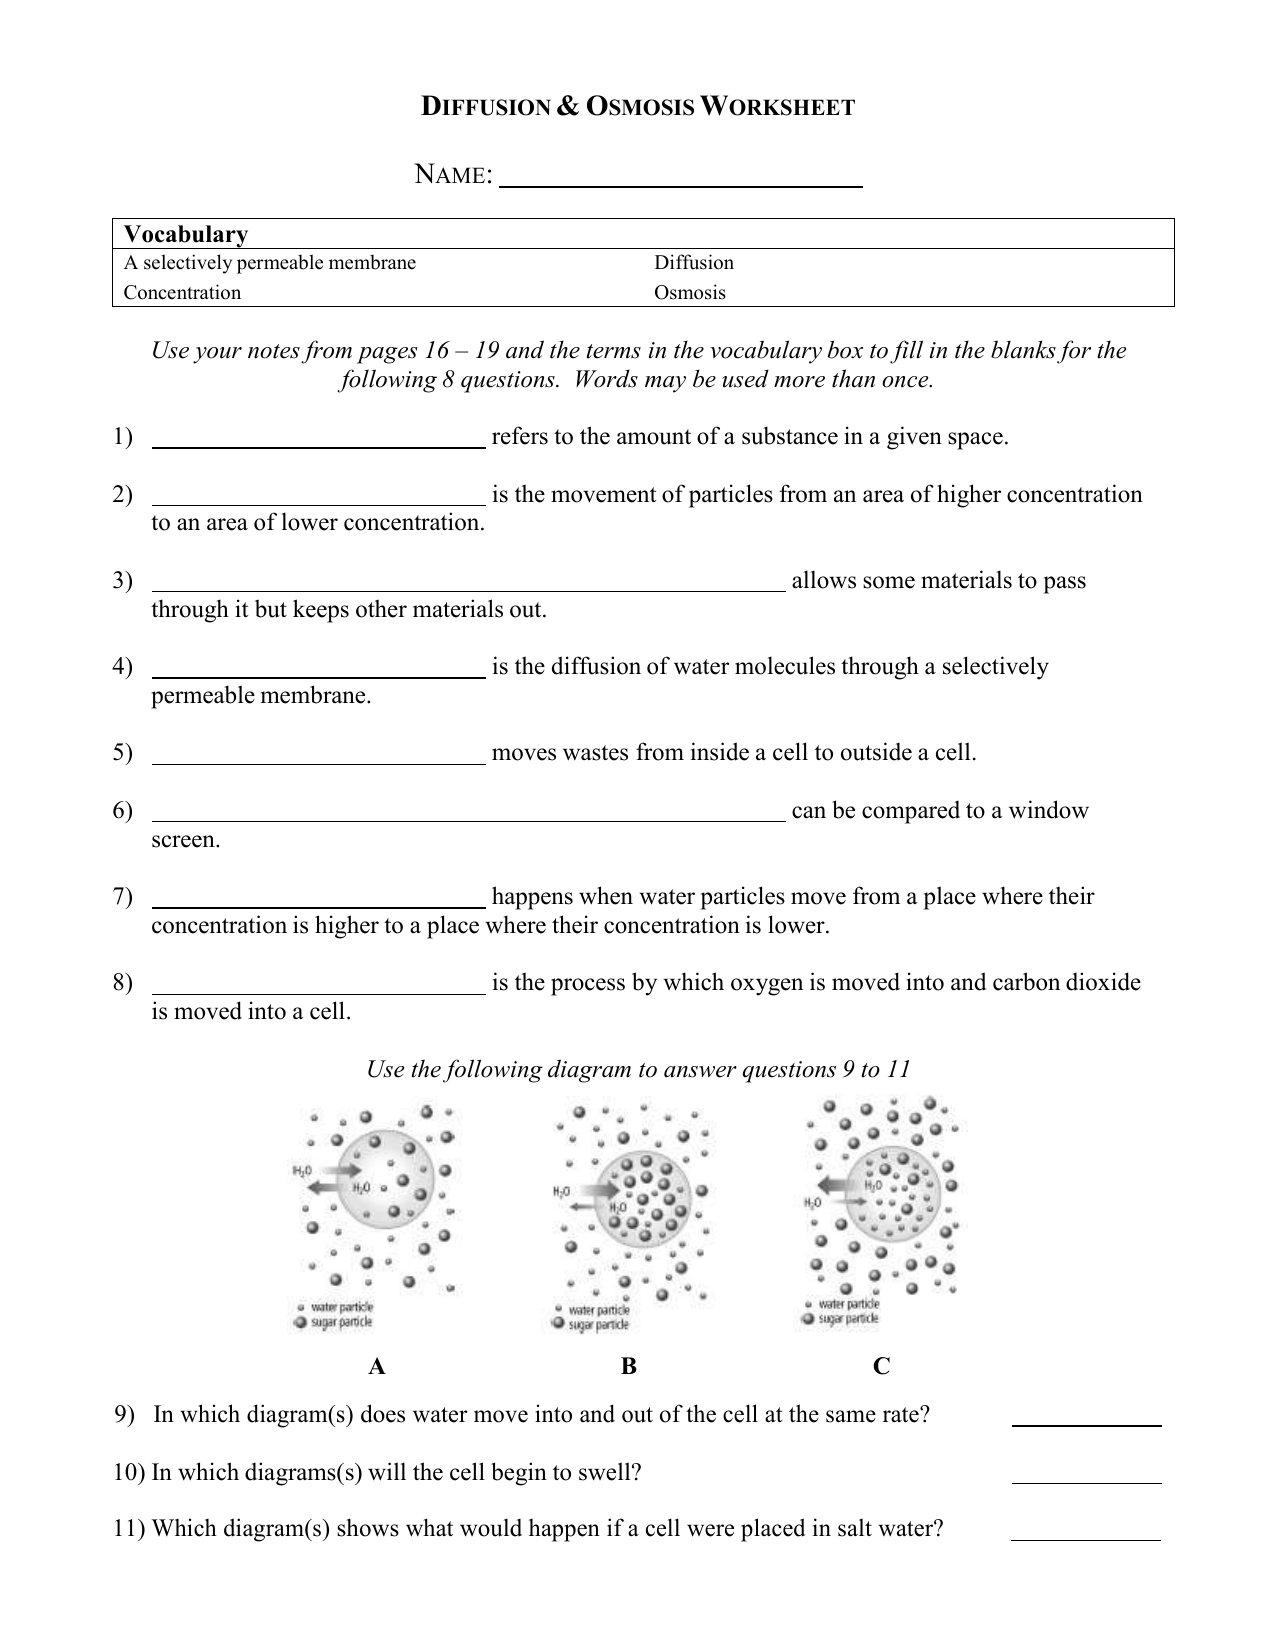 Diffusion-Osmosis-Worksheet 22 Throughout Diffusion And Osmosis Worksheet Answers